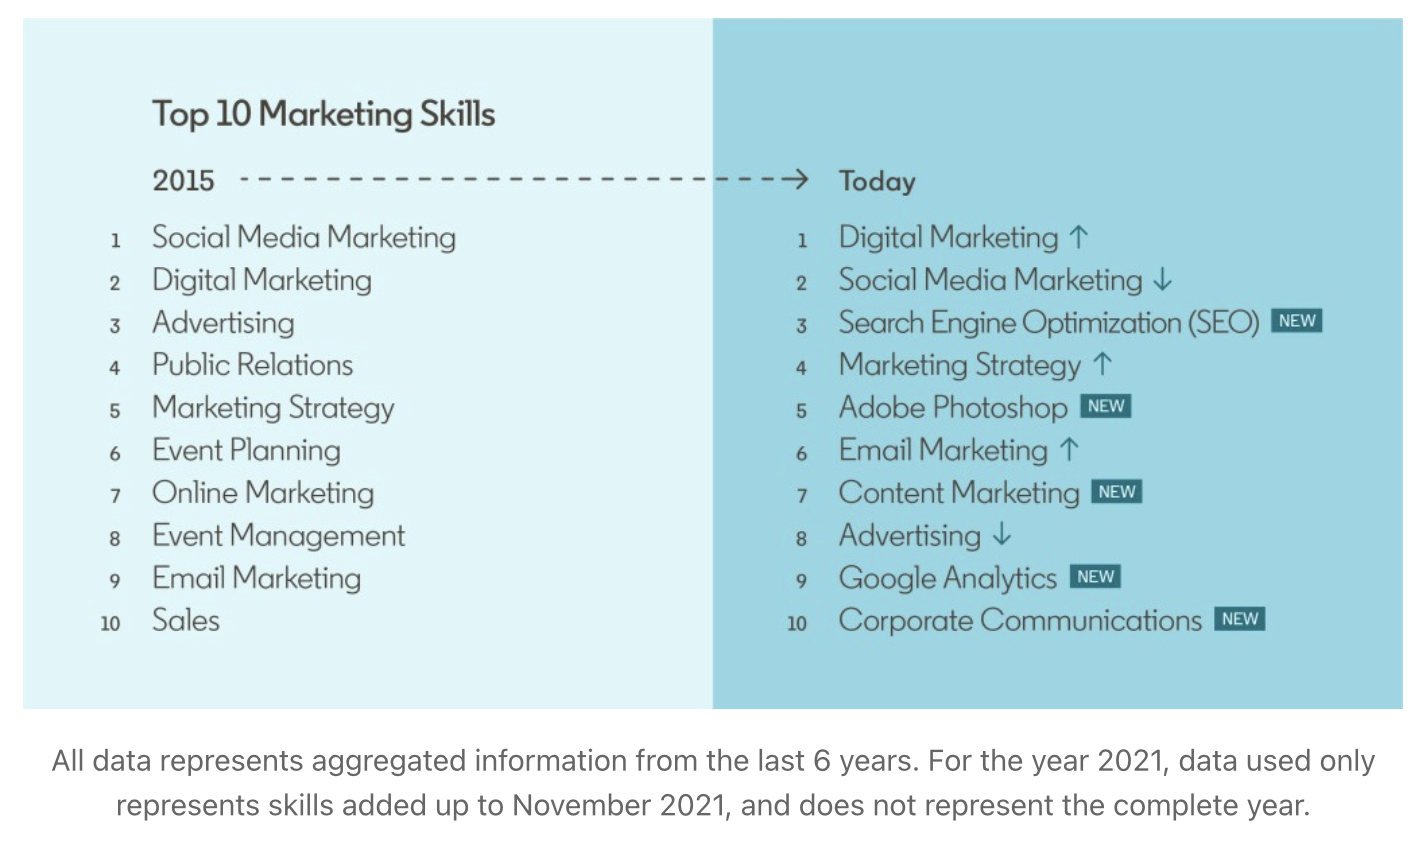 LinkedIn lists the 20 most in-demand skills